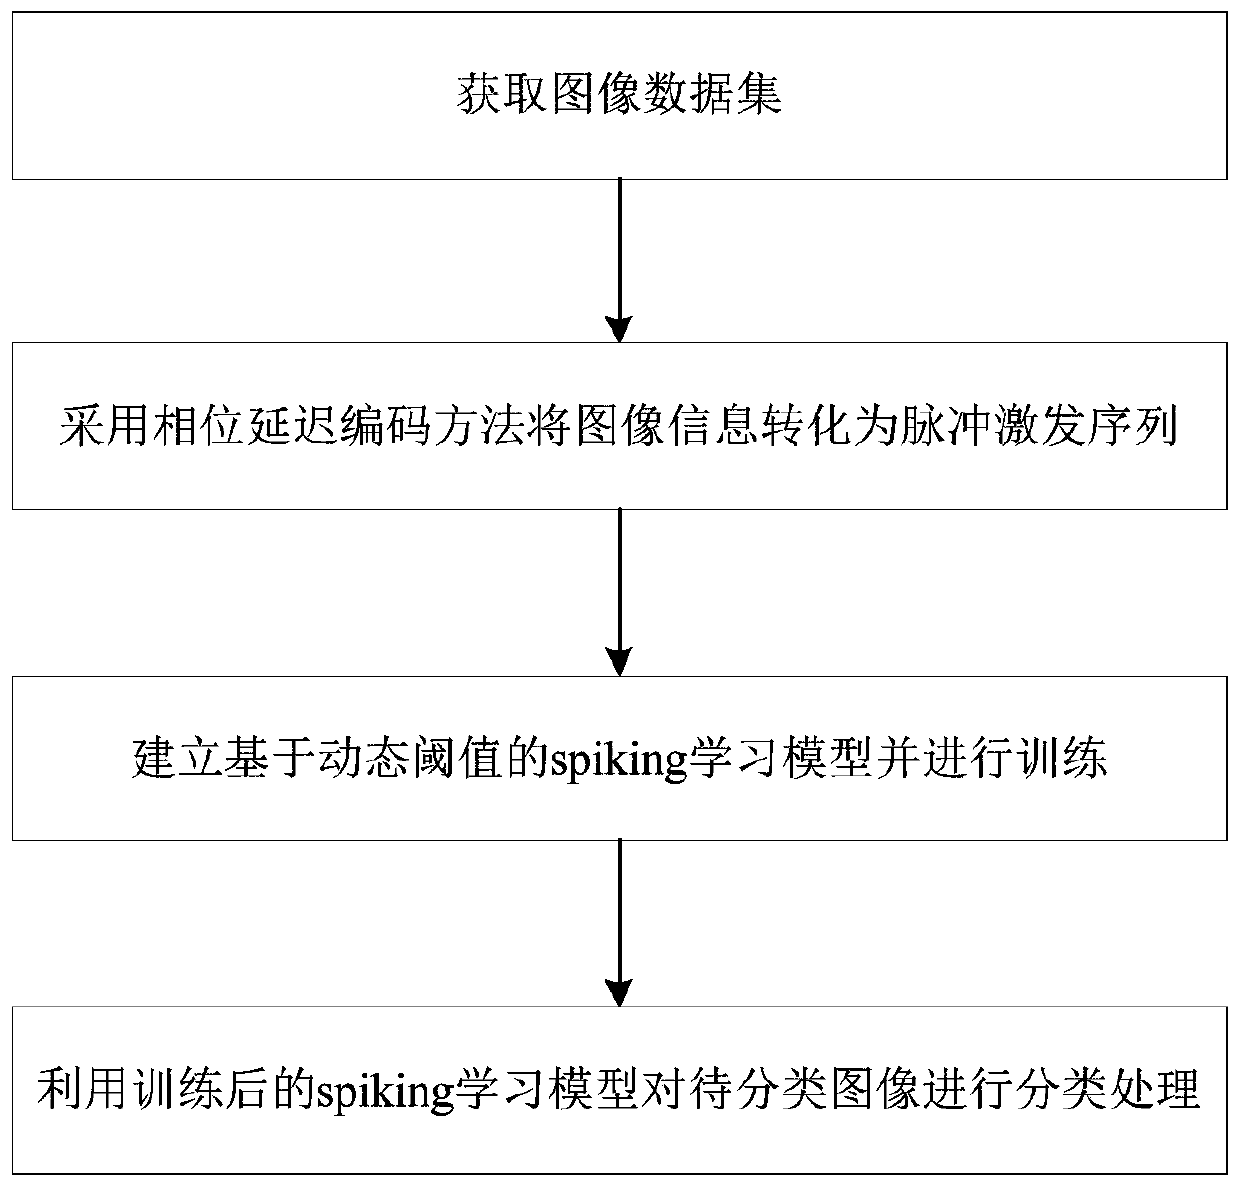 Image classification method of spiking learning model based on dynamic threshold